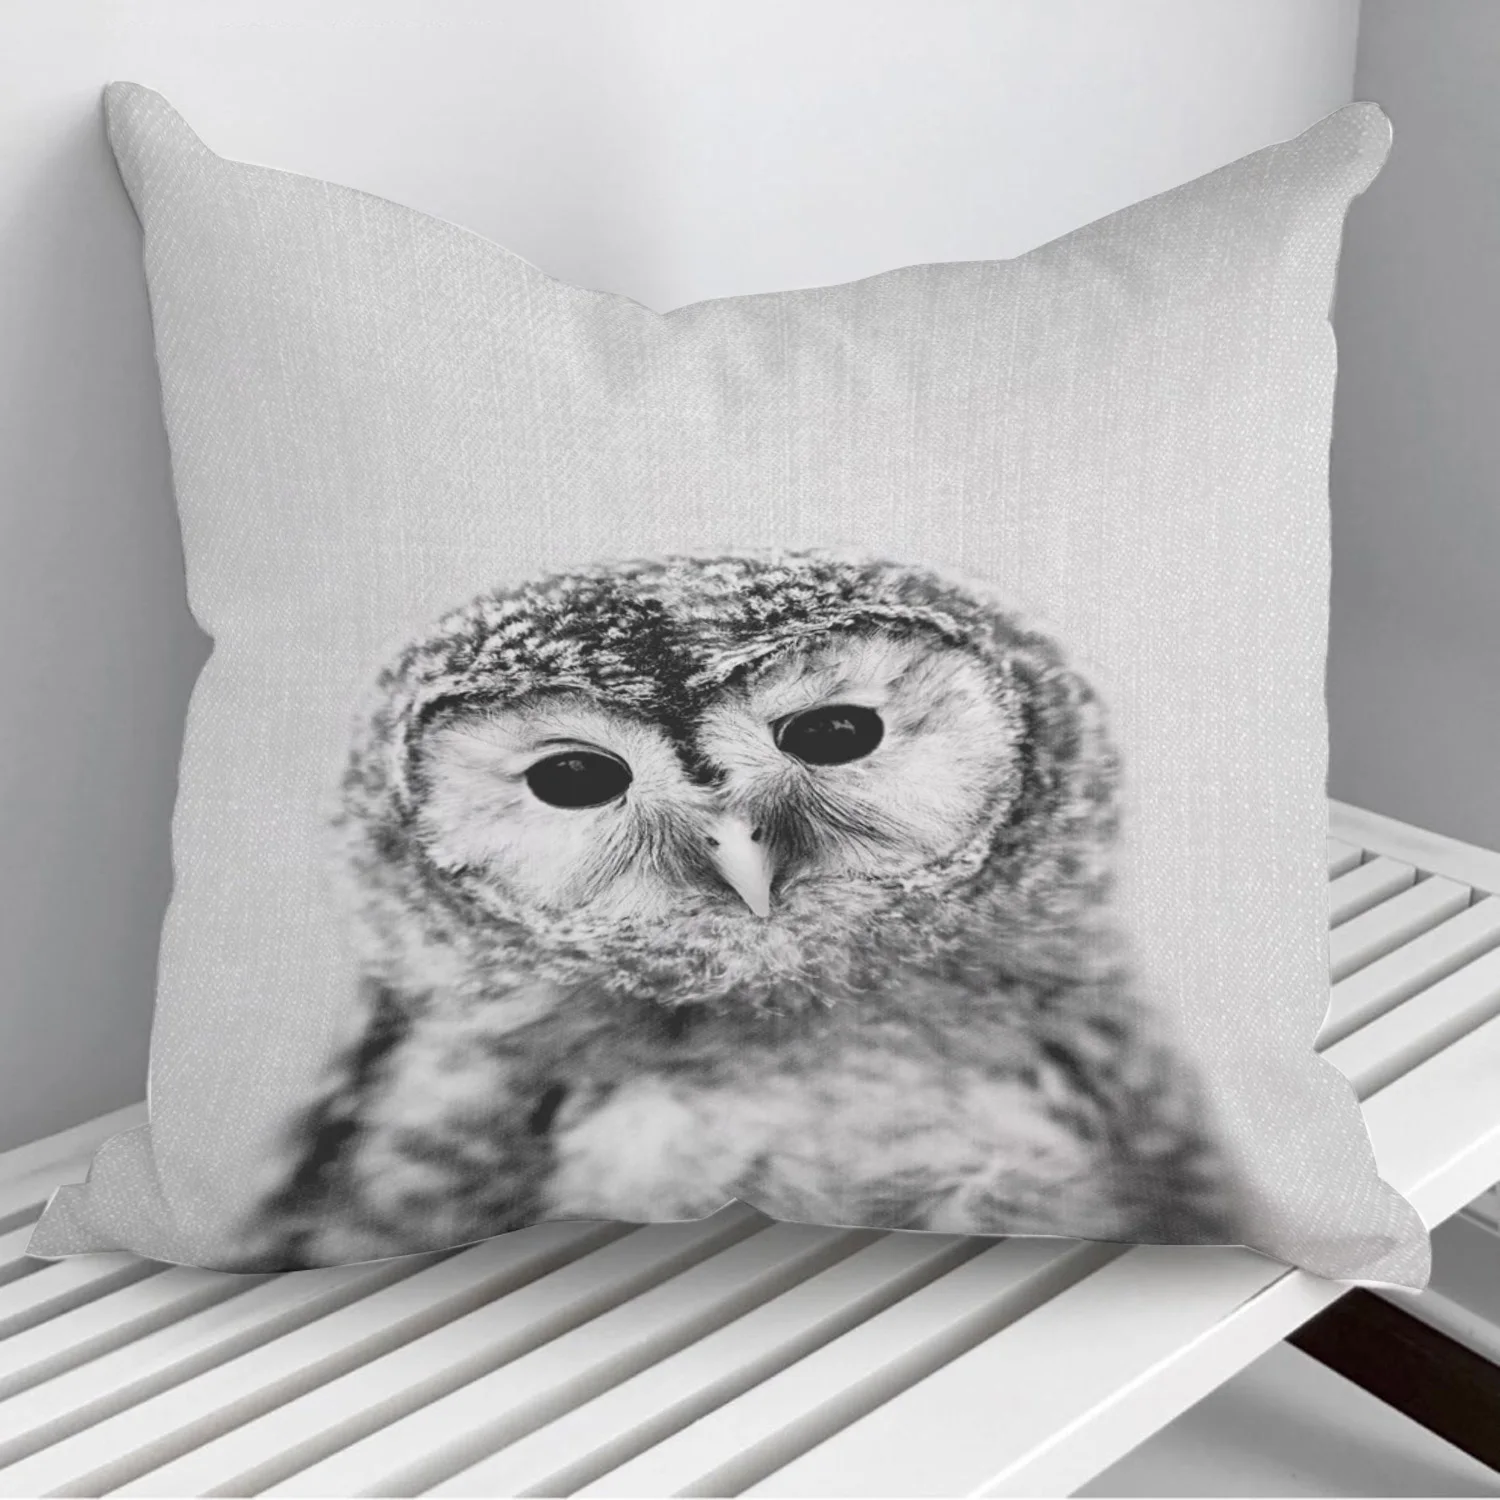 

Baby Owl BW Throw Pillows Cushion Cover On Sofa Home Decor 45*45cm 40*40cm Gift Pillowcase Cojines Dropshipping